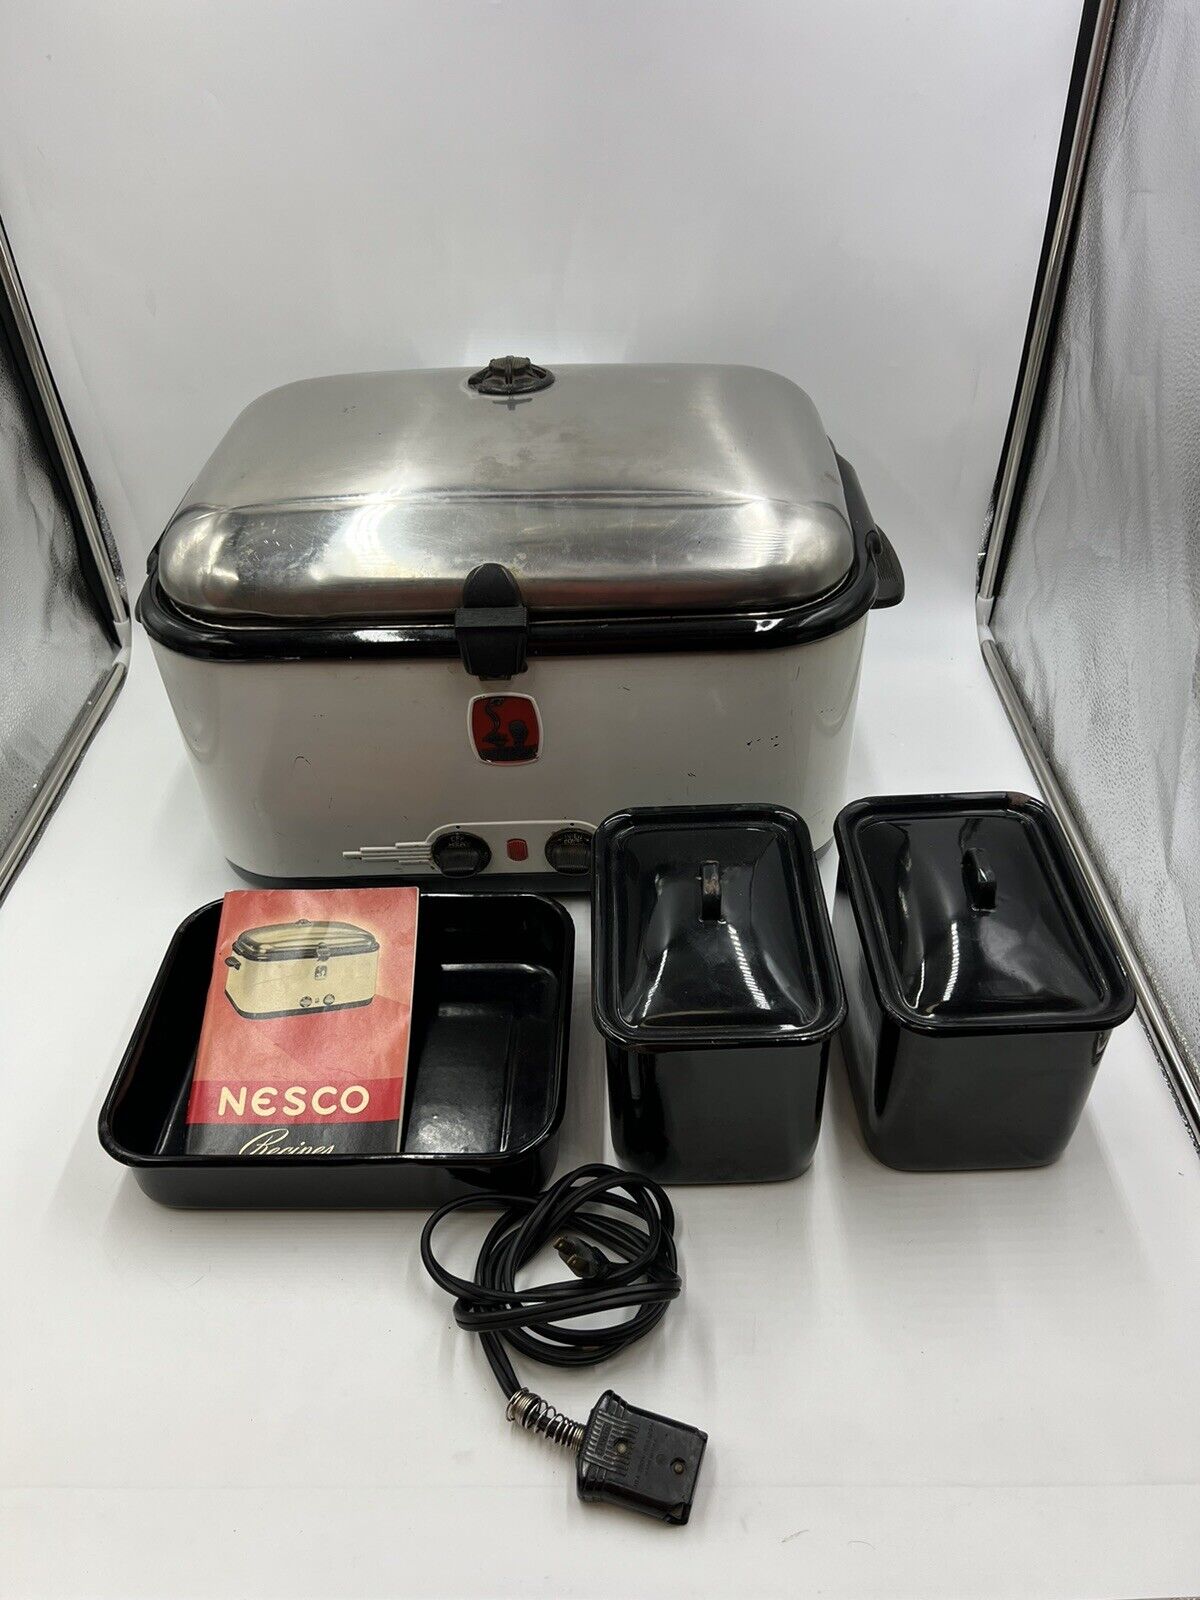 Vintage Nesco Countertop Automatic Electric Roaster